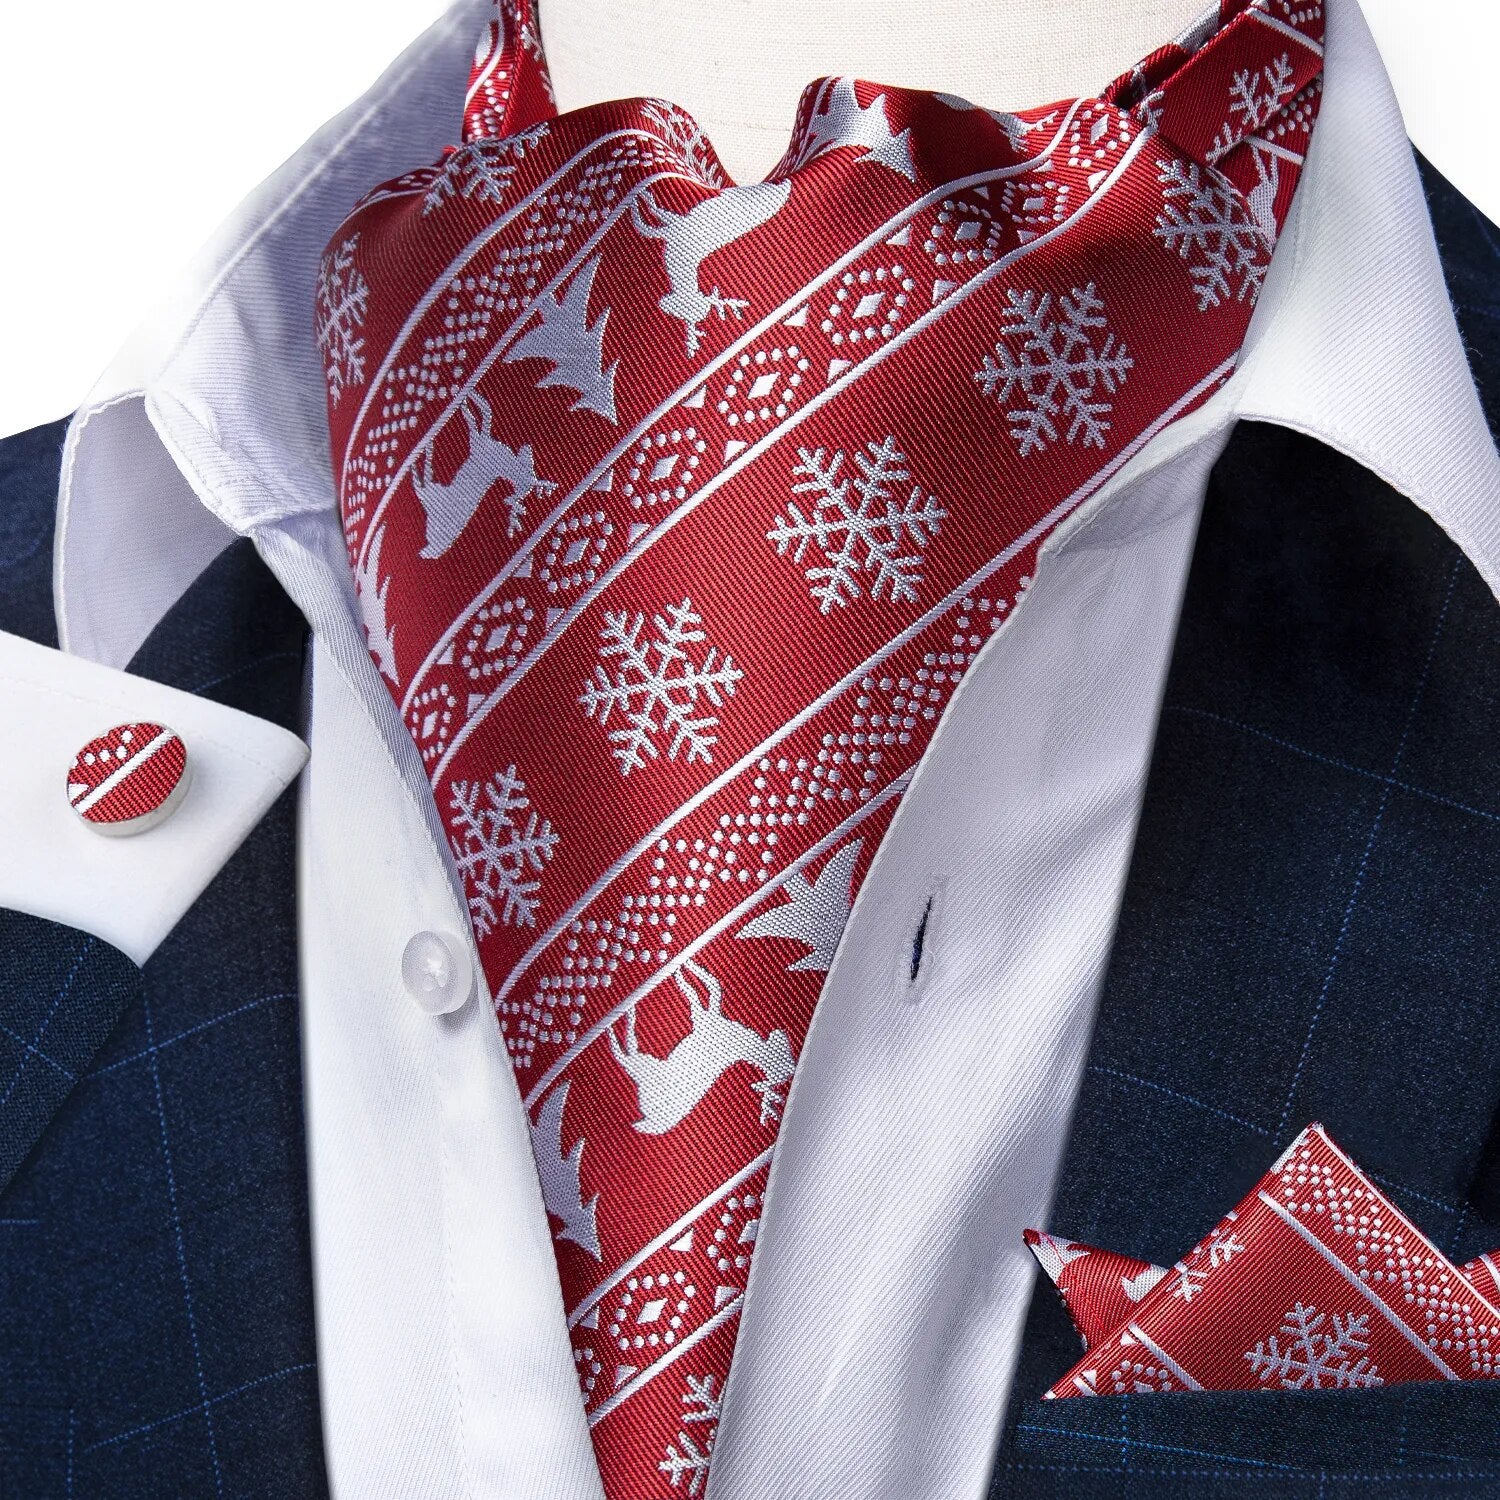 Fashion Men's Christmas Ascot Pocket Square Cufflinks Set